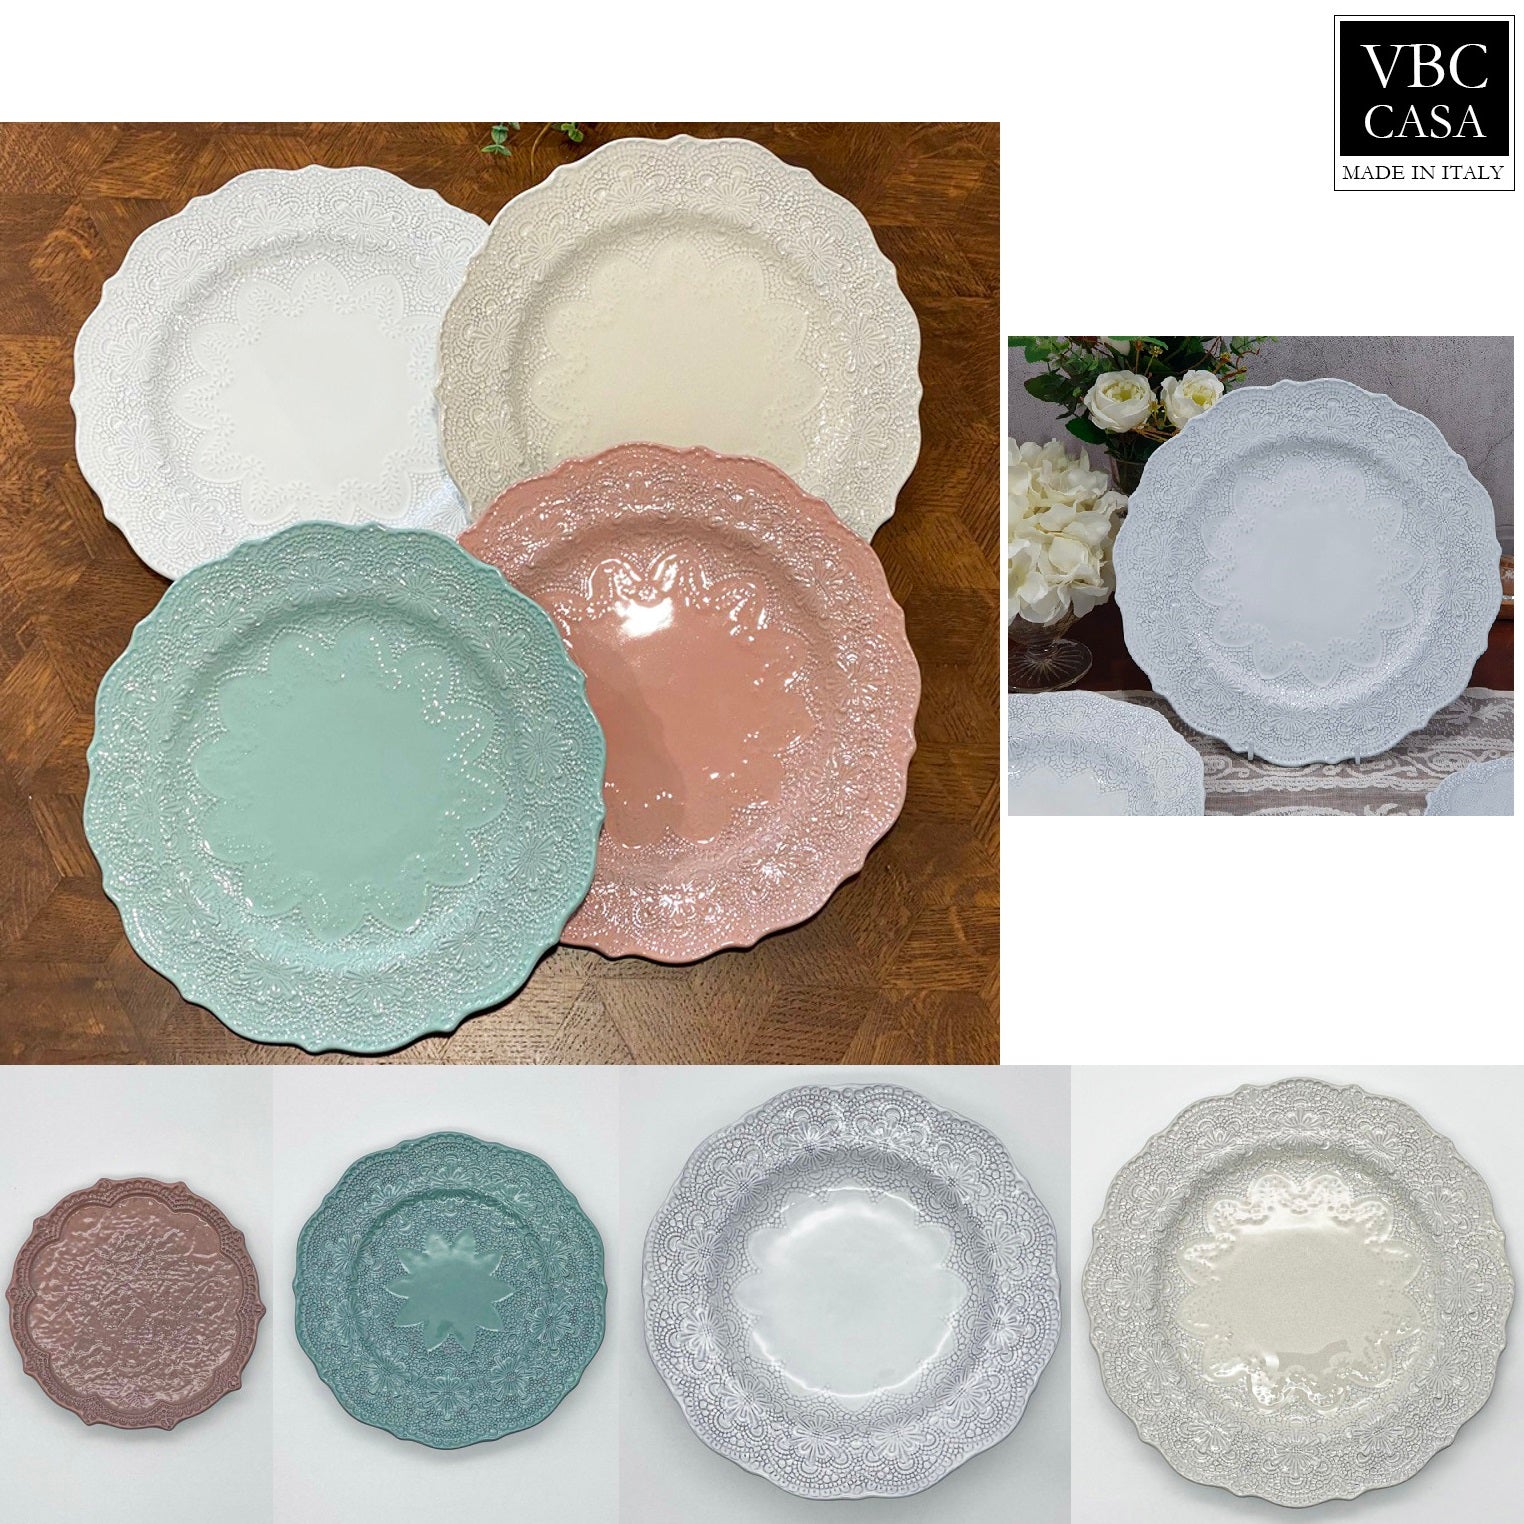 [VBC CASA] Lace Canapes/Salad/Pasta/Dinner plate 4色 皿 食器セット 韓国人気 家の贈り物 誕生日プレゼント キッチン用品 陶器 高級インテリア